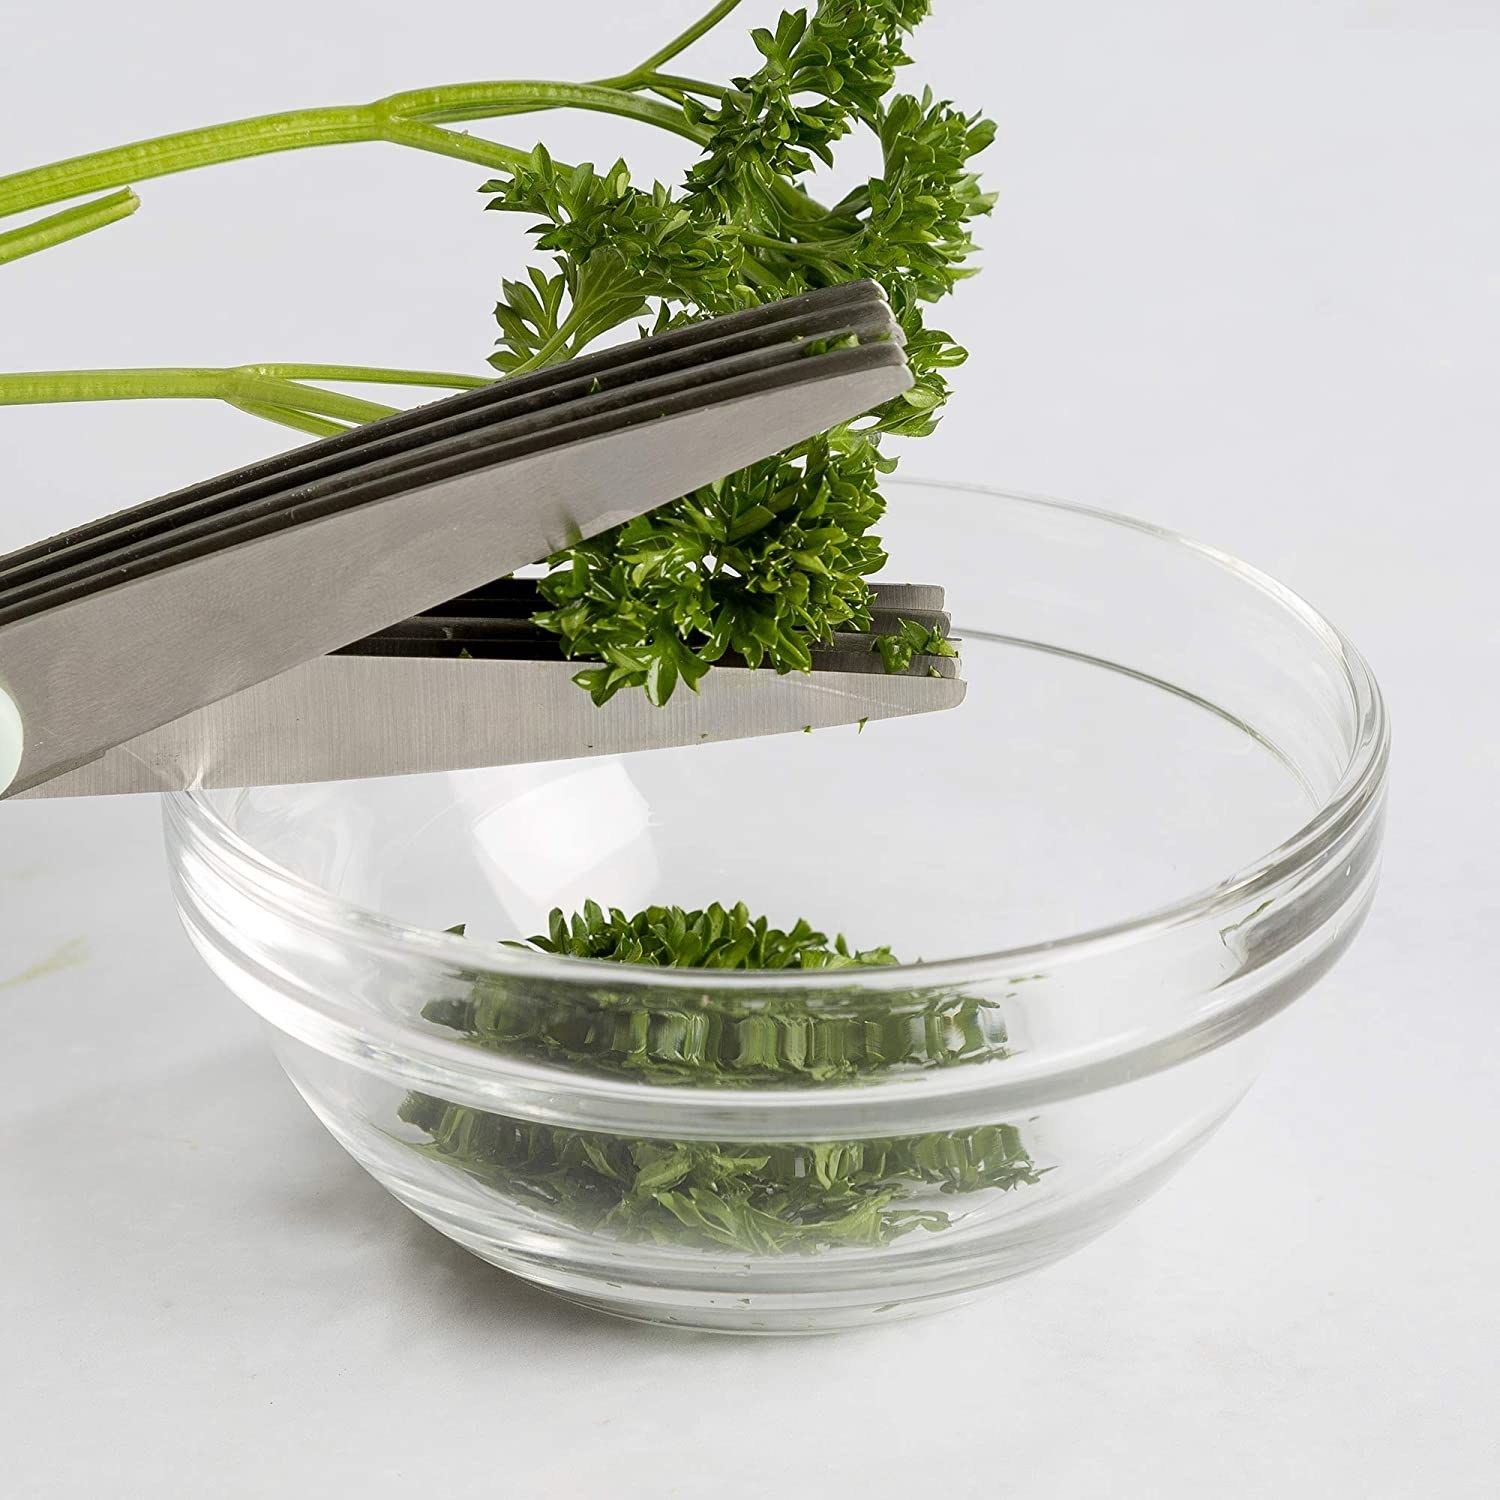 Scissors cutting herbs into a bowl